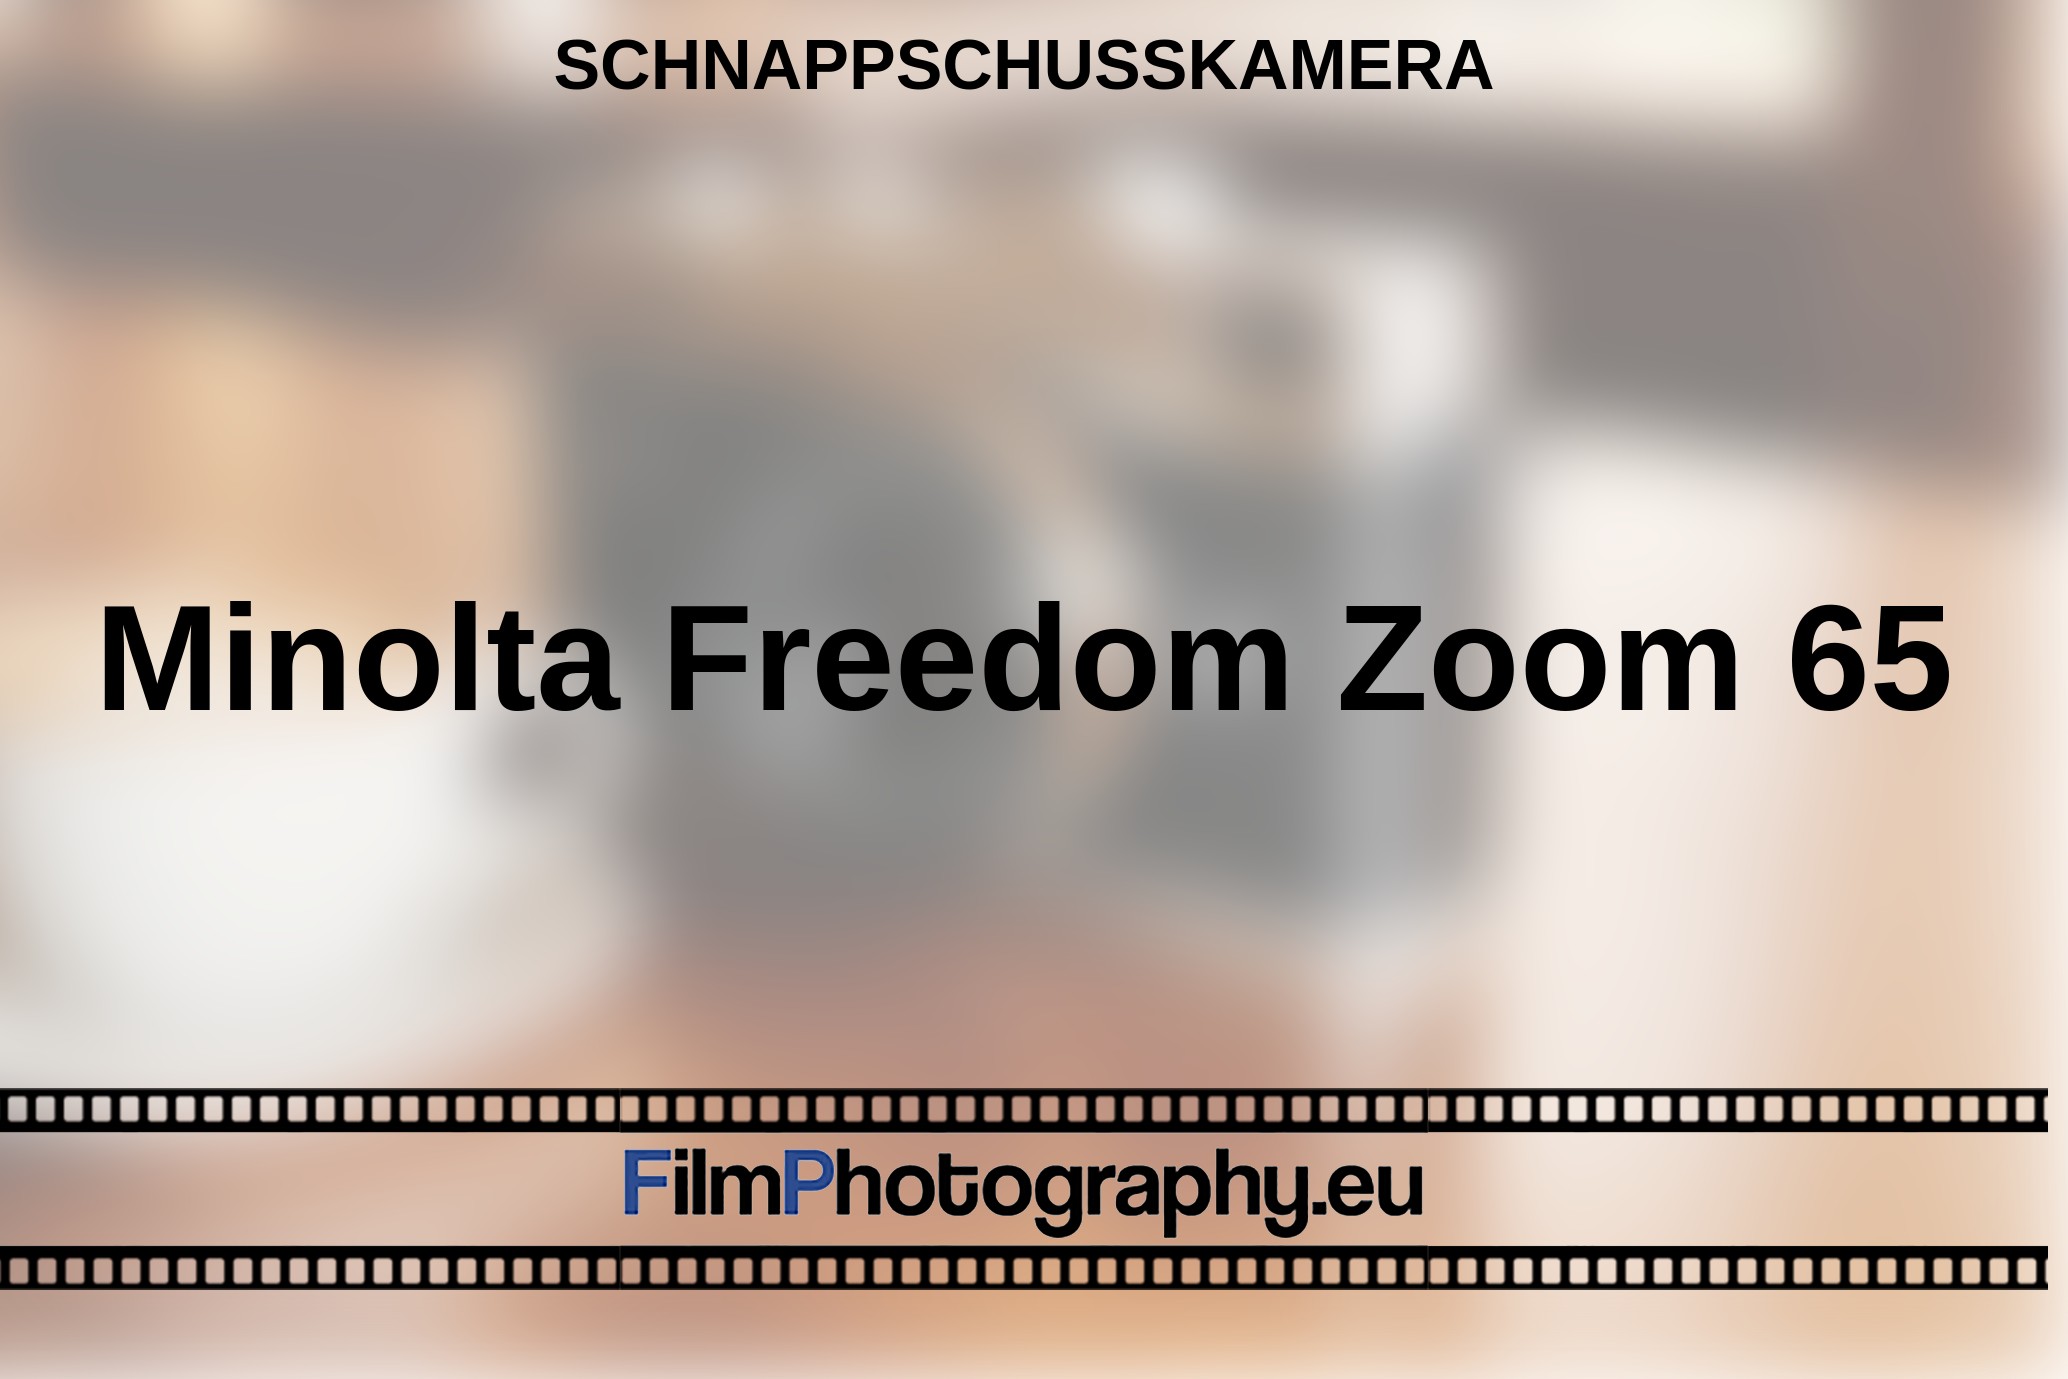 Minolta-Freedom-Zoom-65-Schnappschusskamera-bnv.jpg